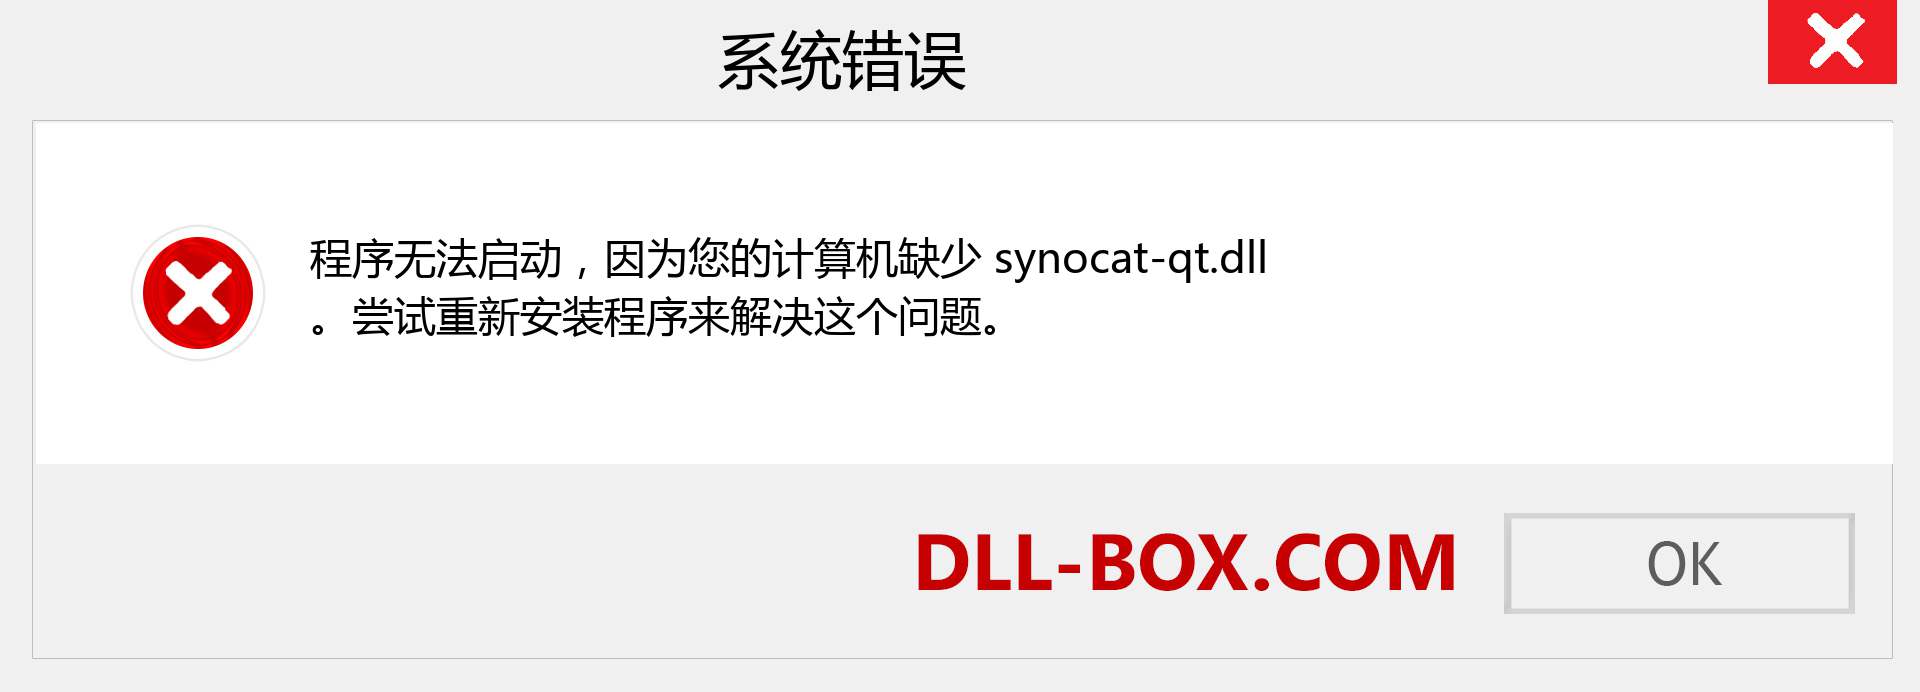 synocat-qt.dll 文件丢失？。 适用于 Windows 7、8、10 的下载 - 修复 Windows、照片、图像上的 synocat-qt dll 丢失错误